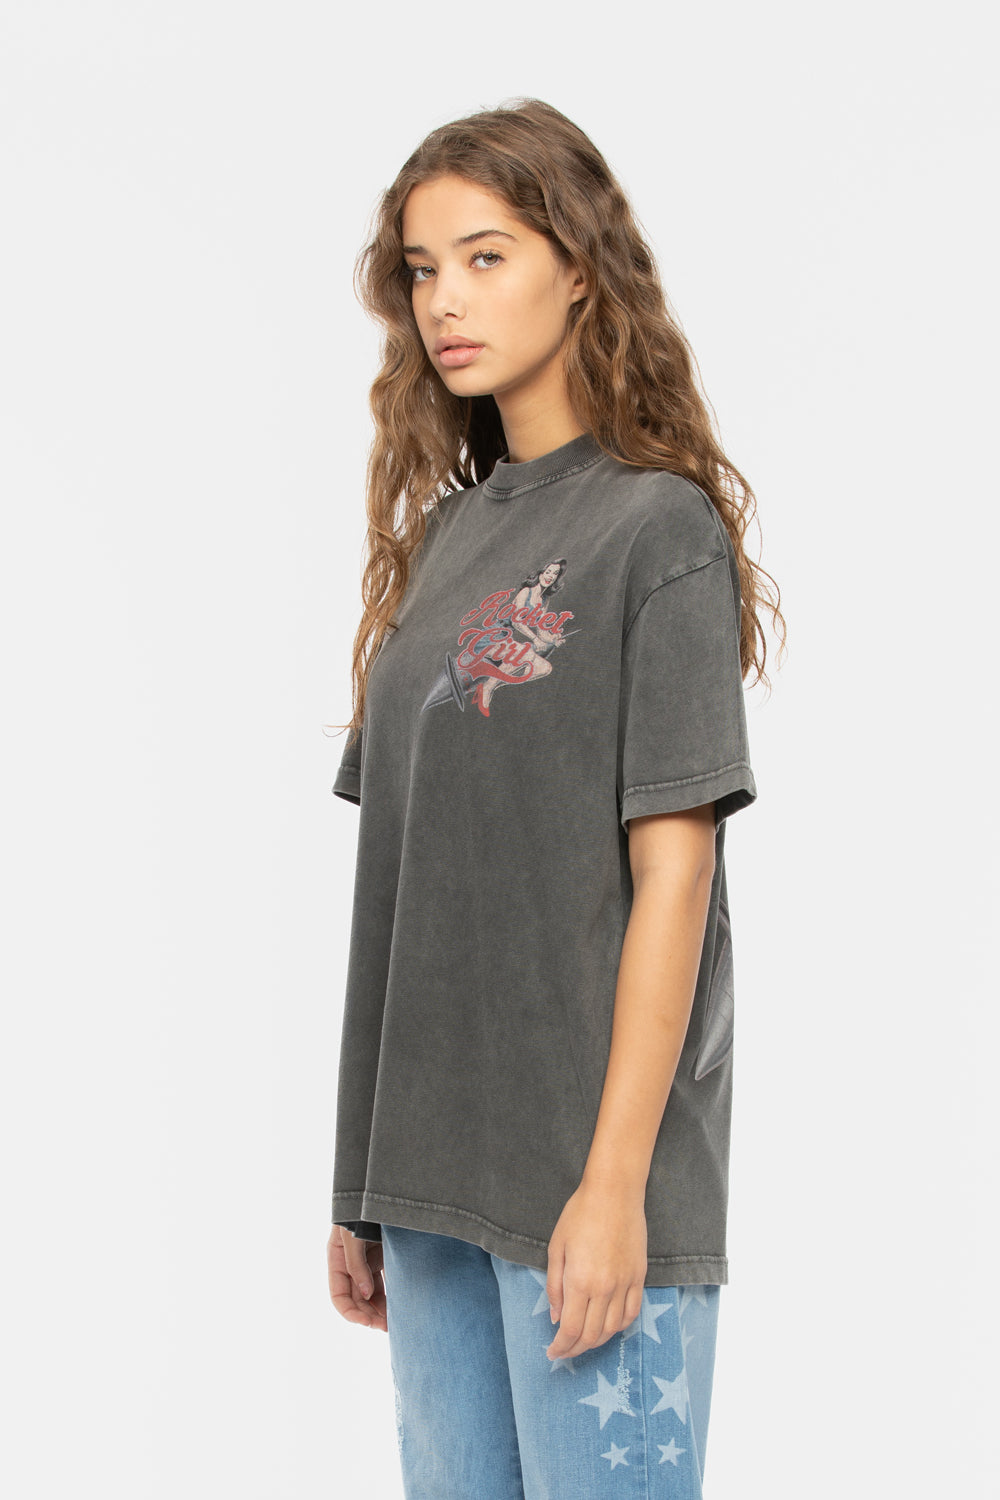 Rocket Girl T-Shirt Grey